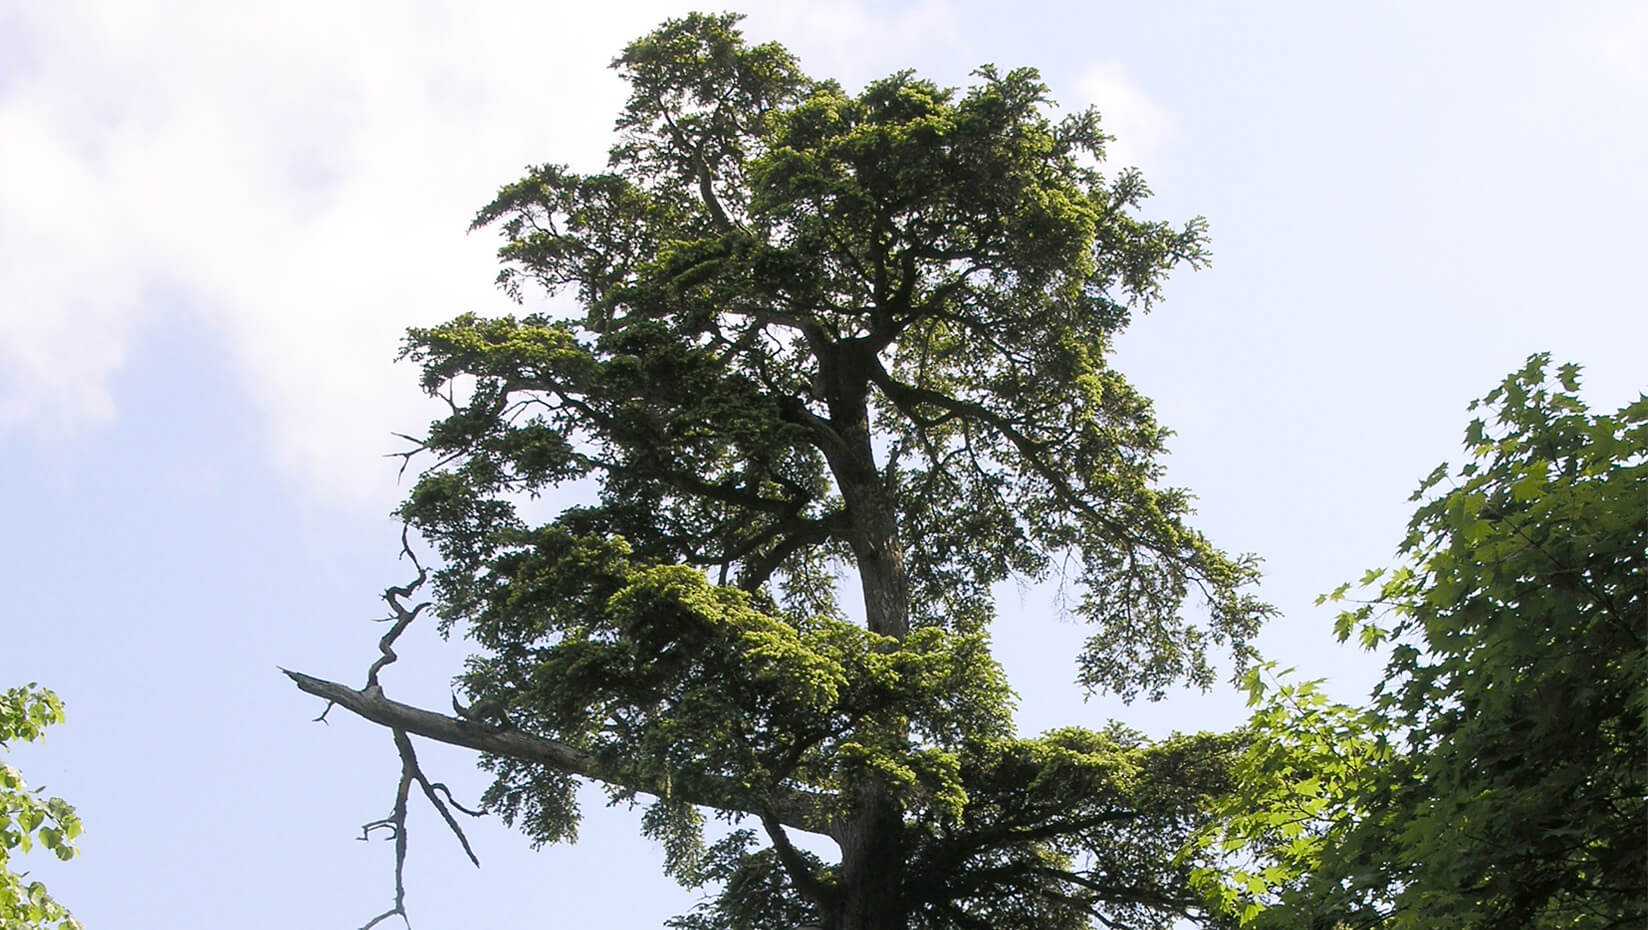 Hemock tree